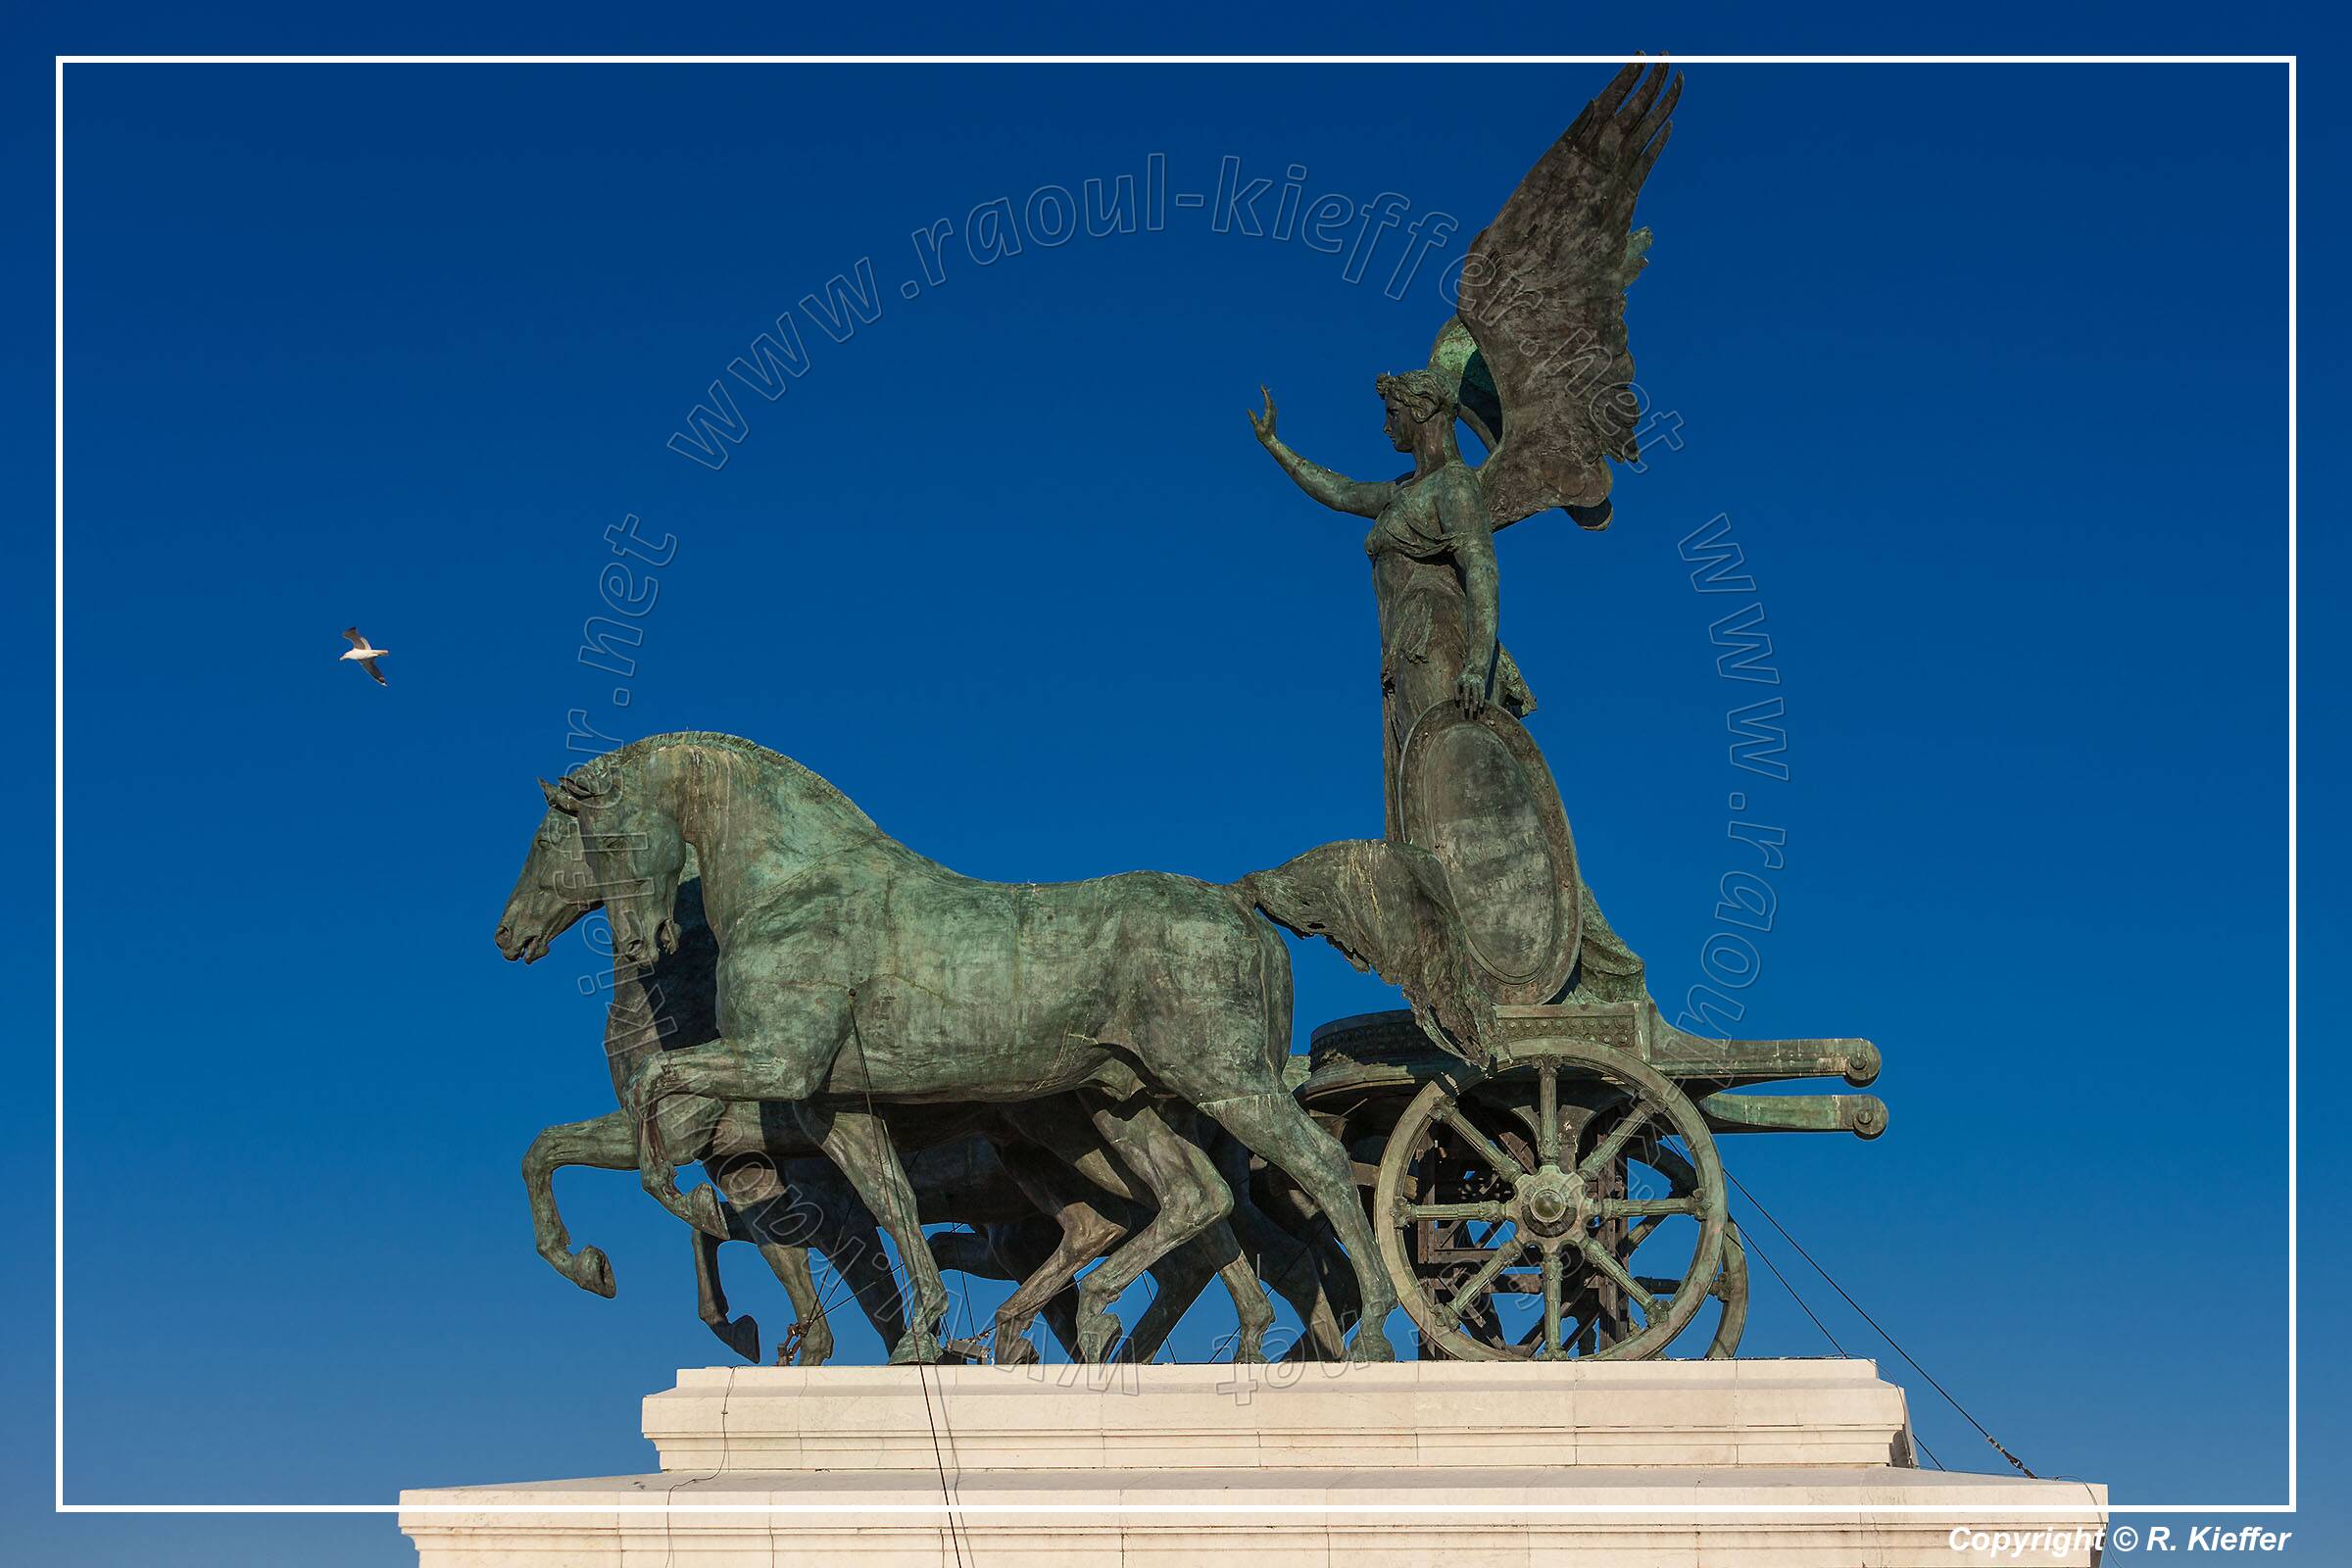 ipernity: The Quadriga on top of the Vittorio Emanuele II Monument